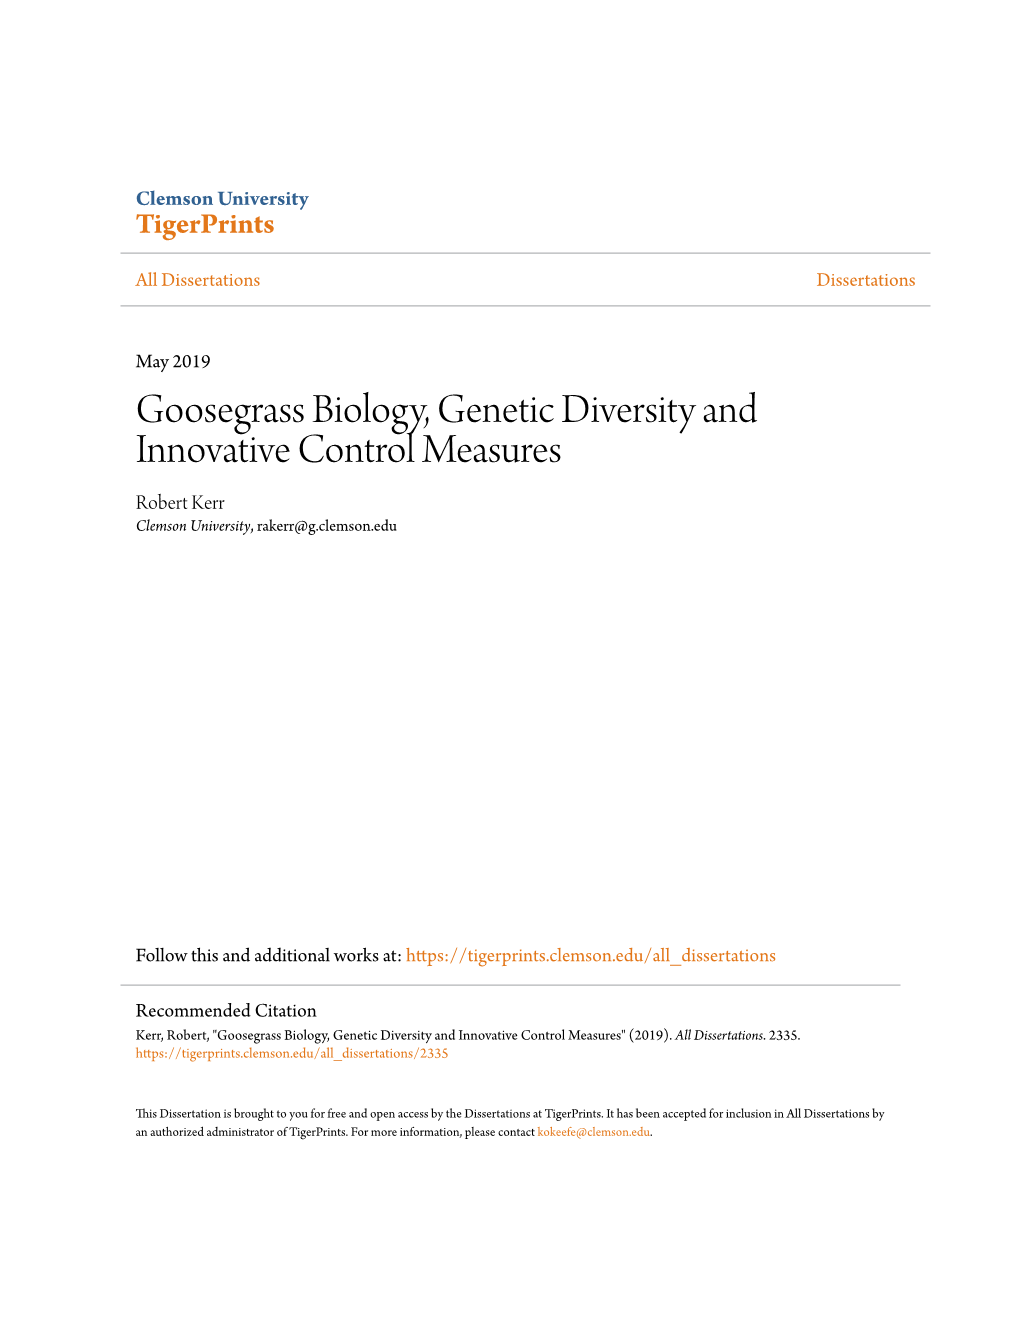 Goosegrass Biology, Genetic Diversity and Innovative Control Measures Robert Kerr Clemson University, Rakerr@G.Clemson.Edu